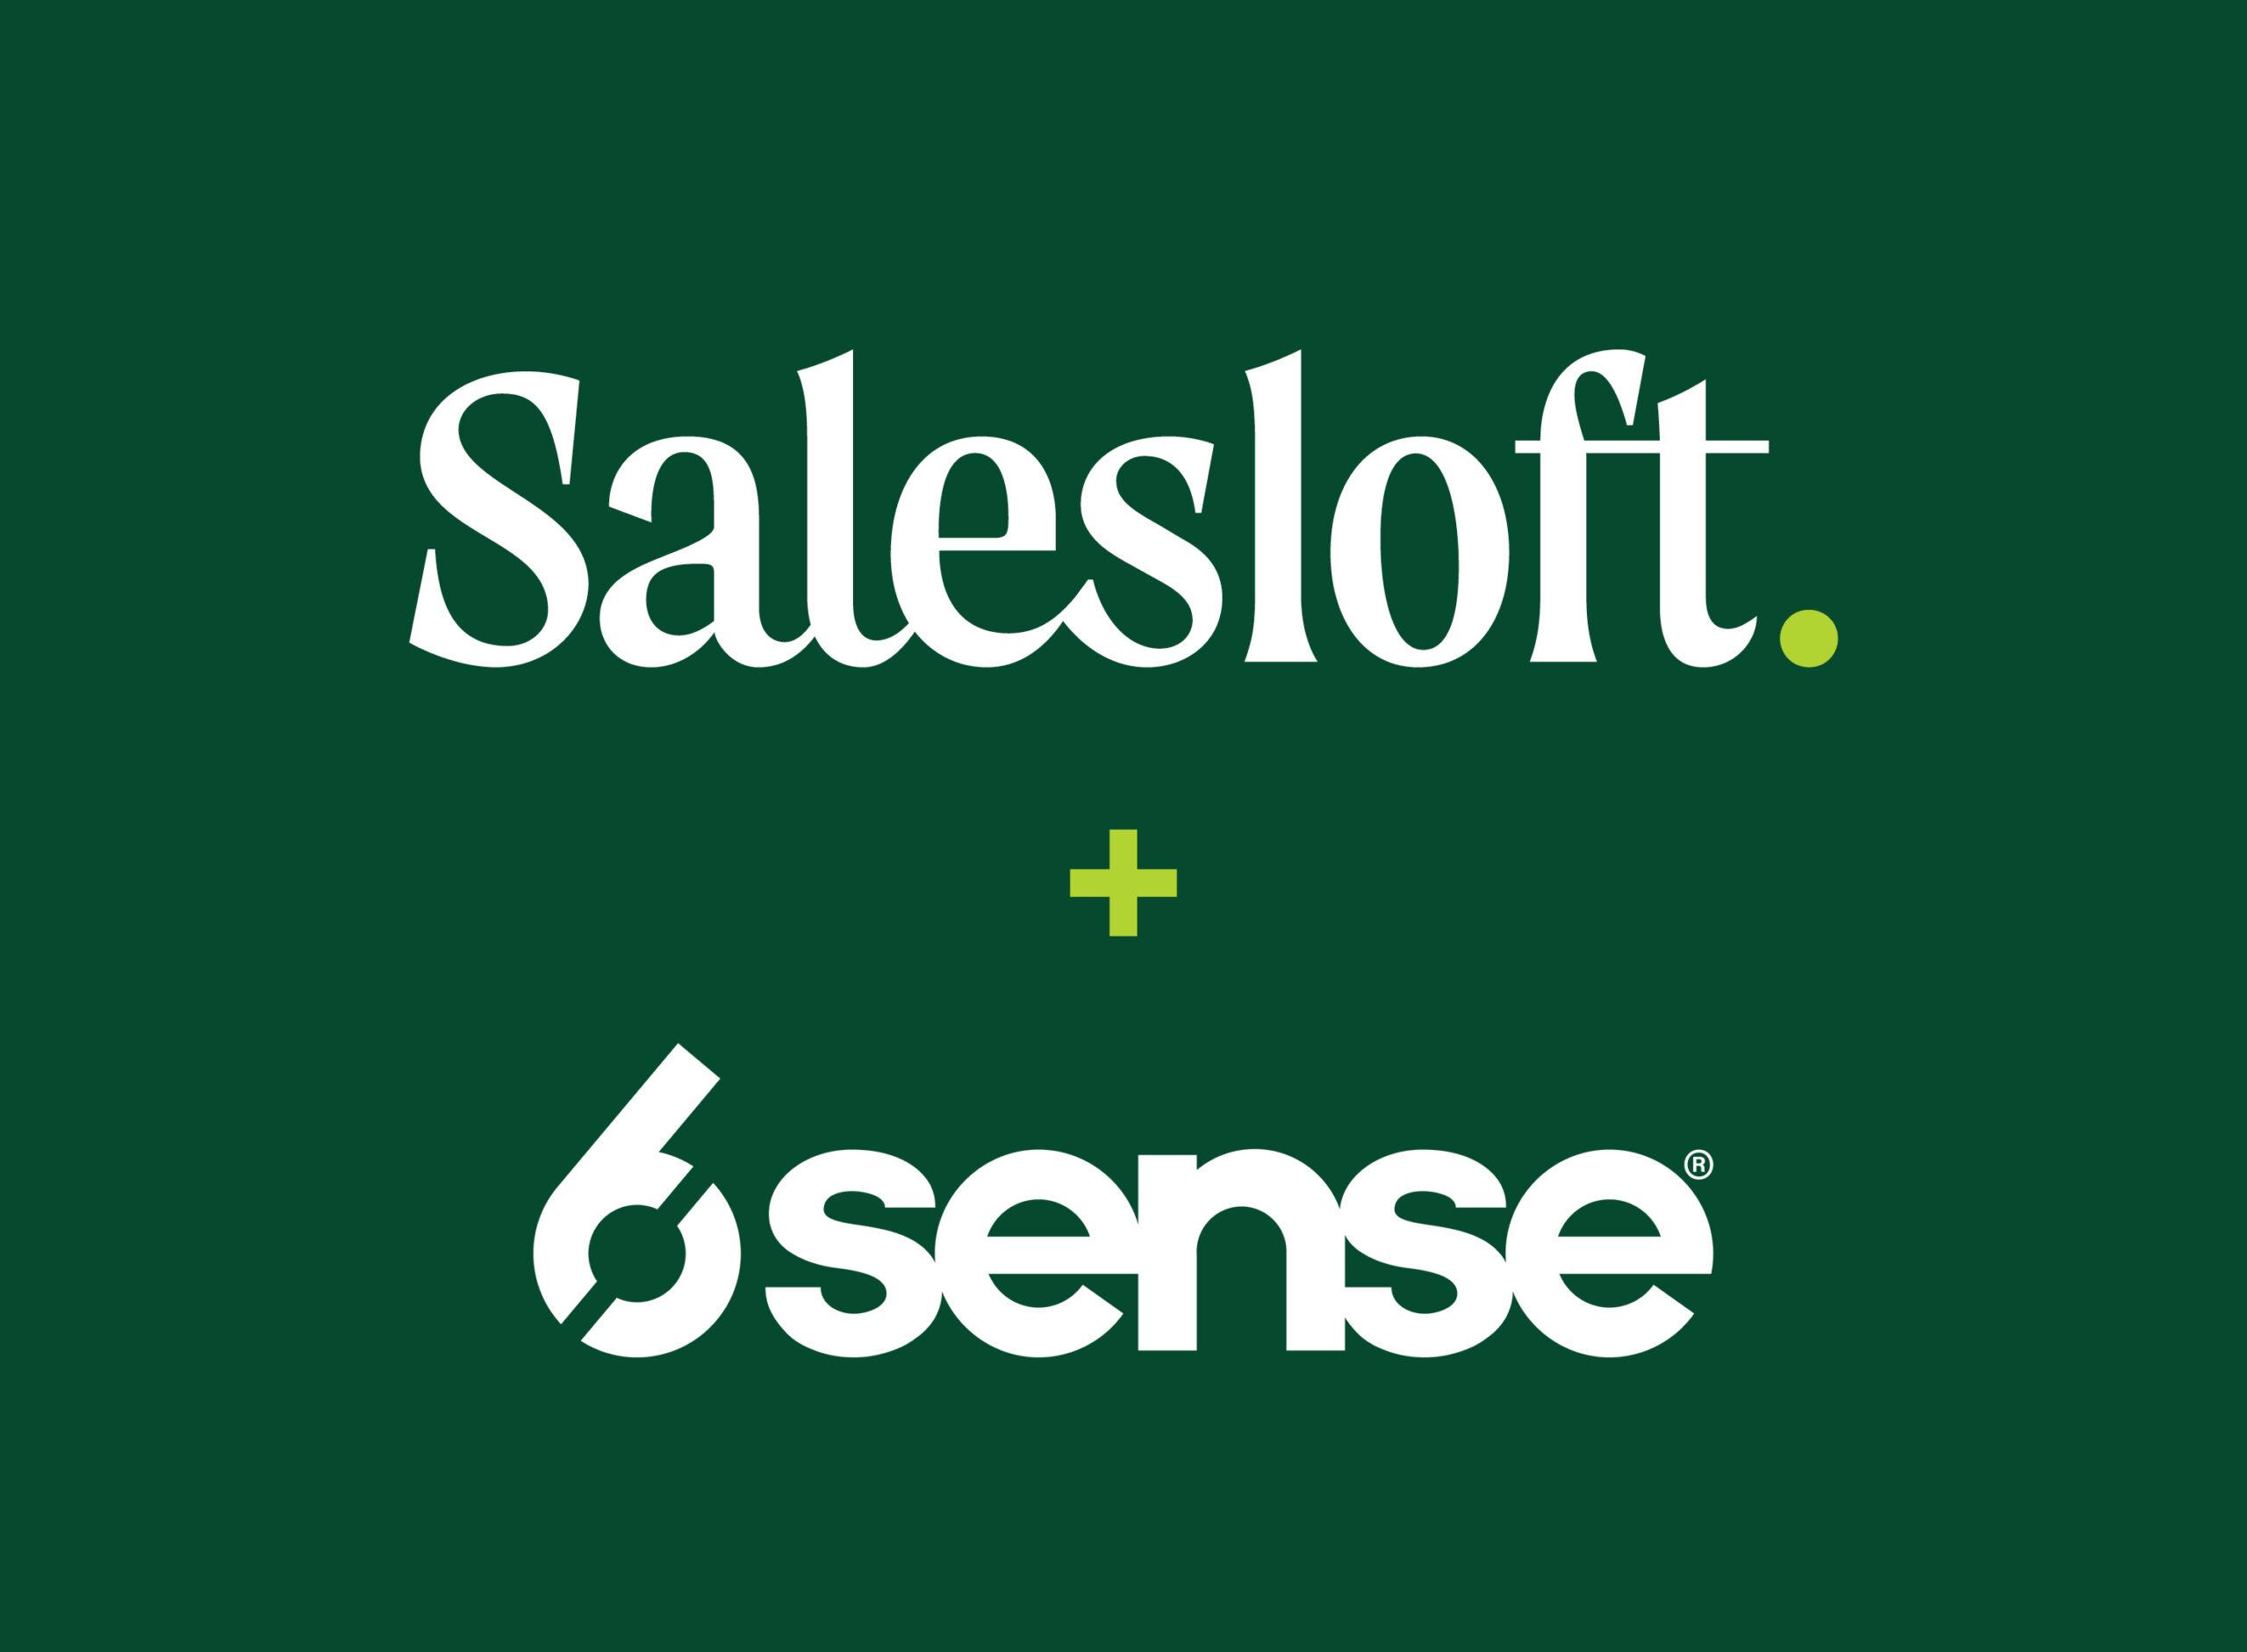 "Salesloft and 6sense"